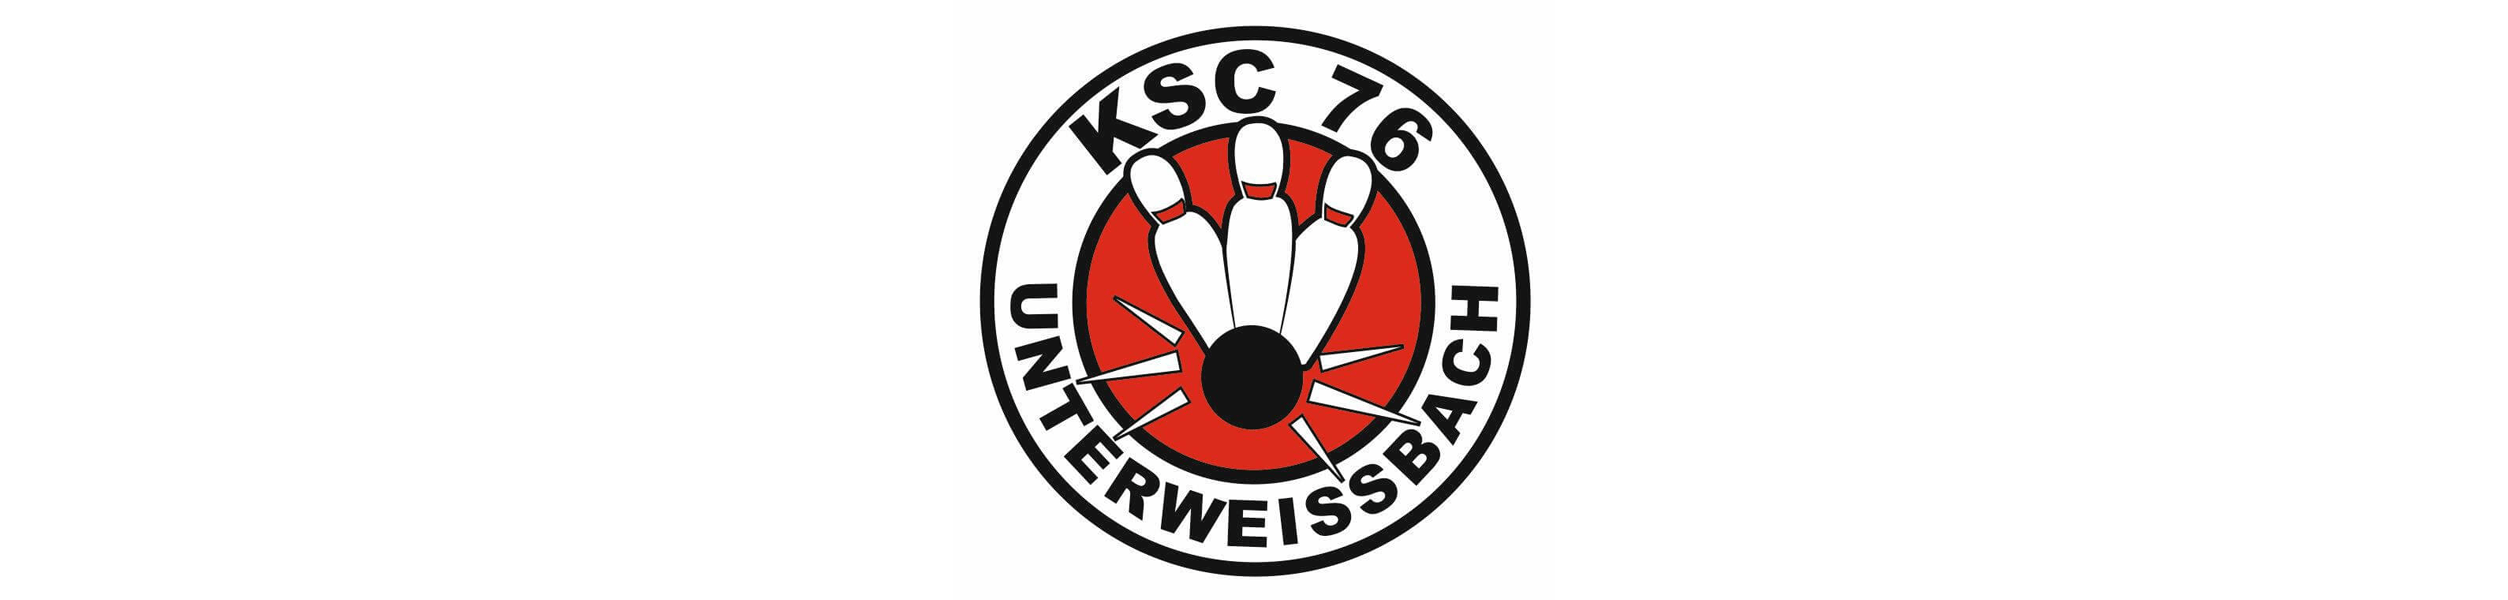 Kegelverein - KSC 76 e.V. Unterweißbach